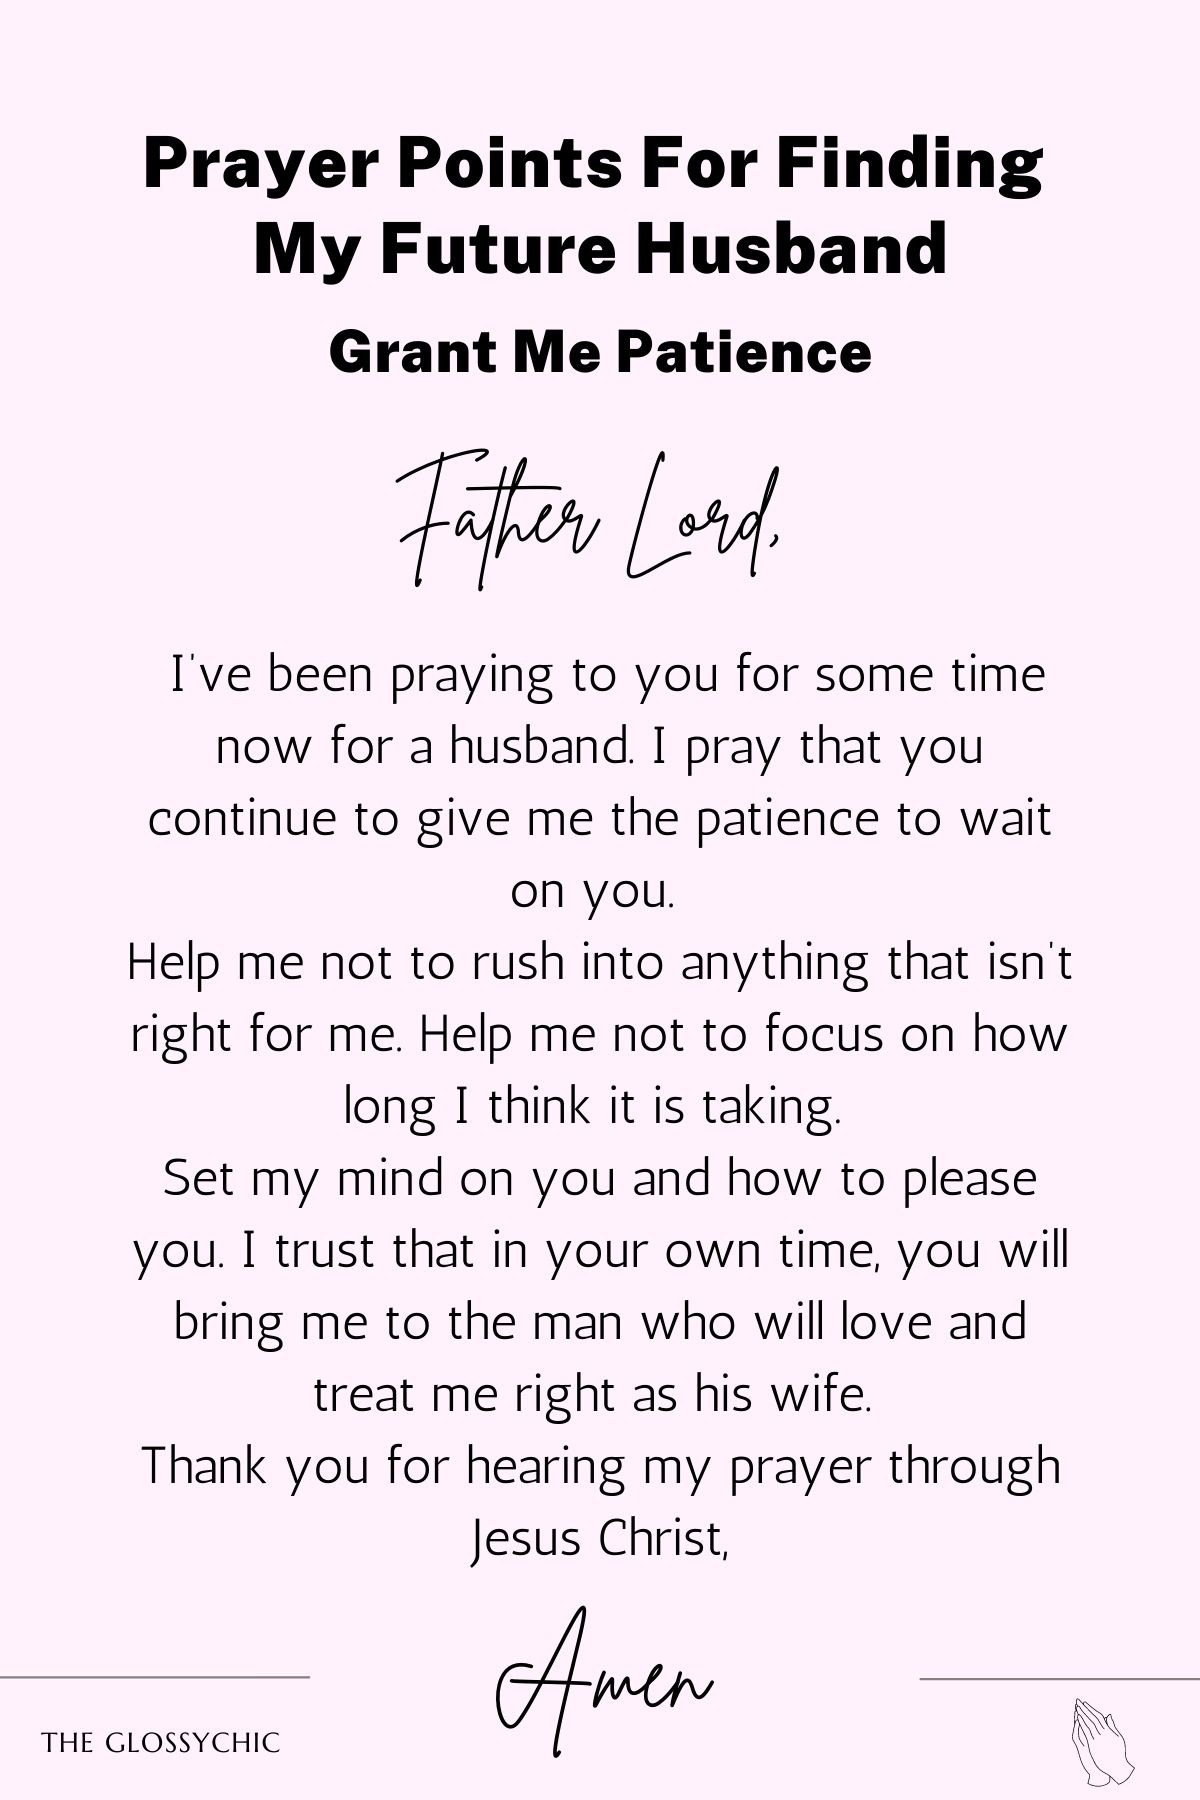 Grant Me Patience